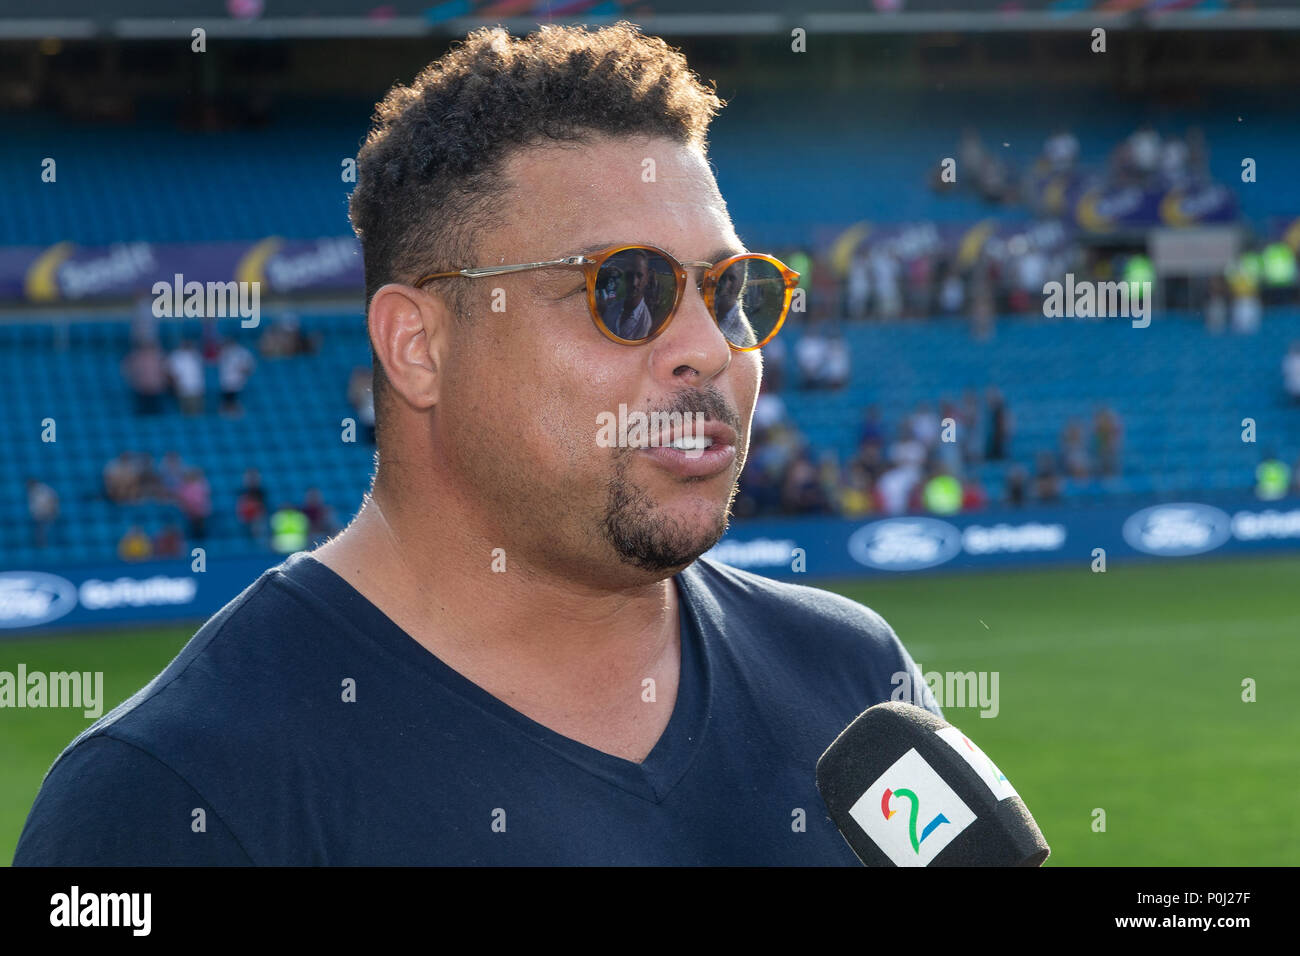 Ronaldo Of Brazil Stockfotos Und Bilder Kaufen Alamy